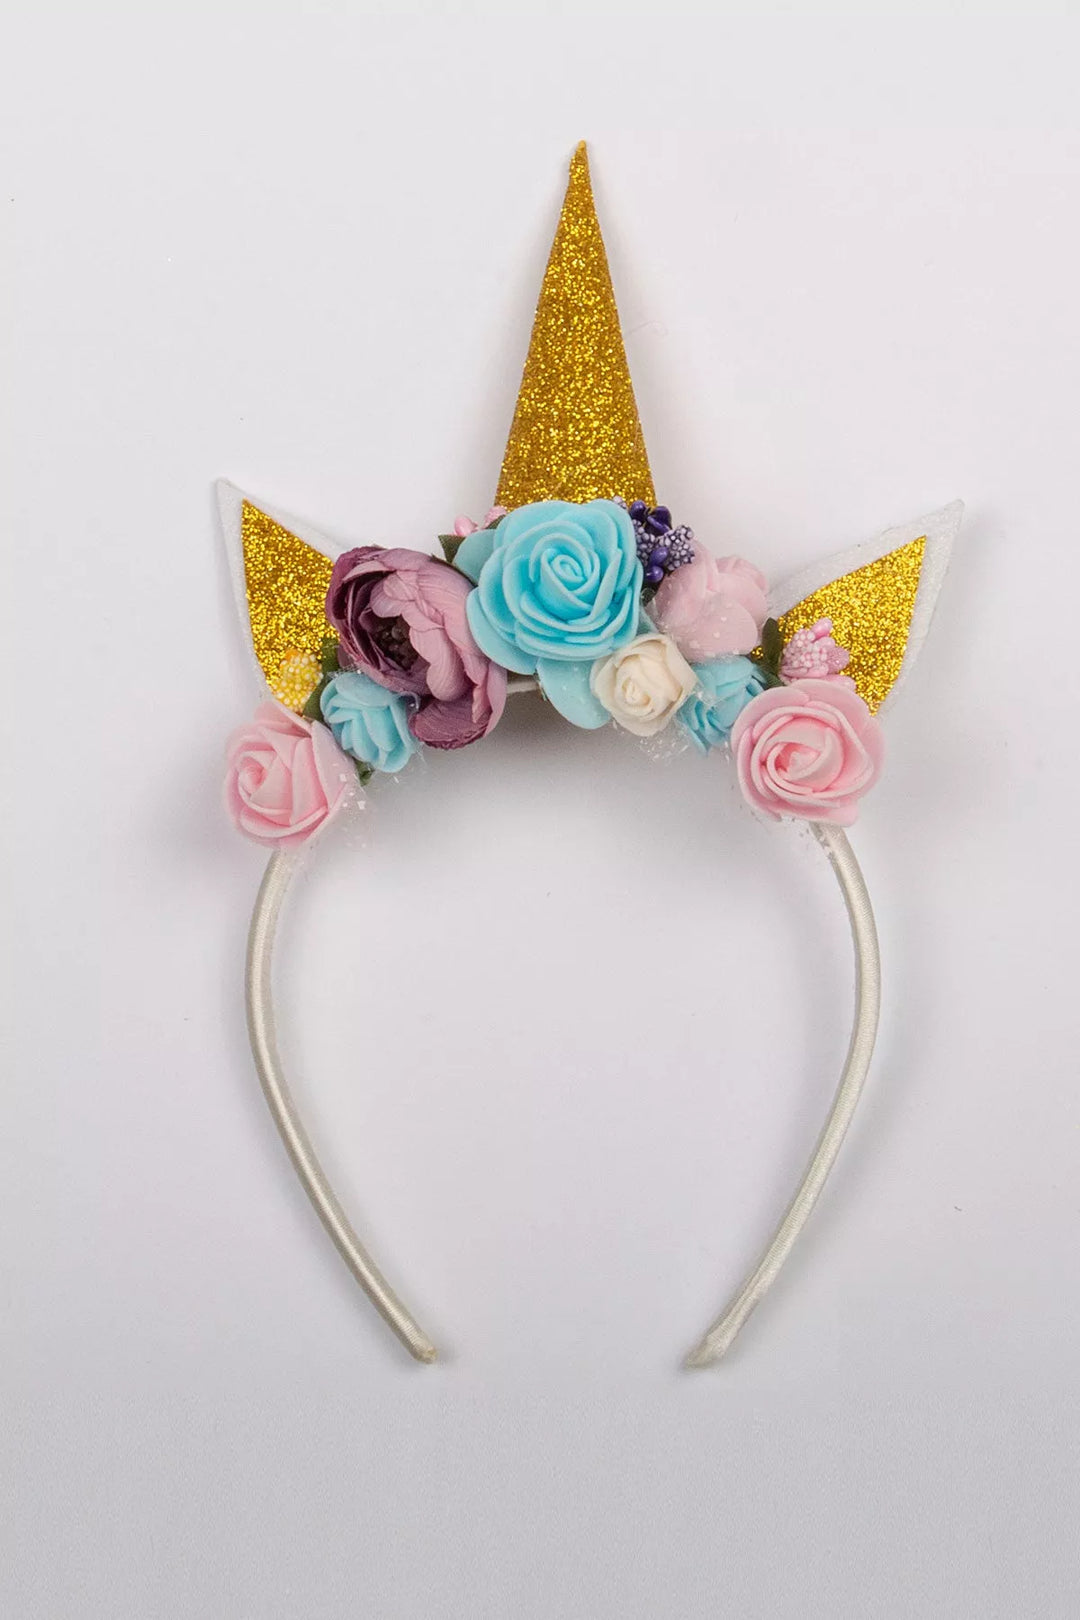 A unicorn gold headpiece for girls.